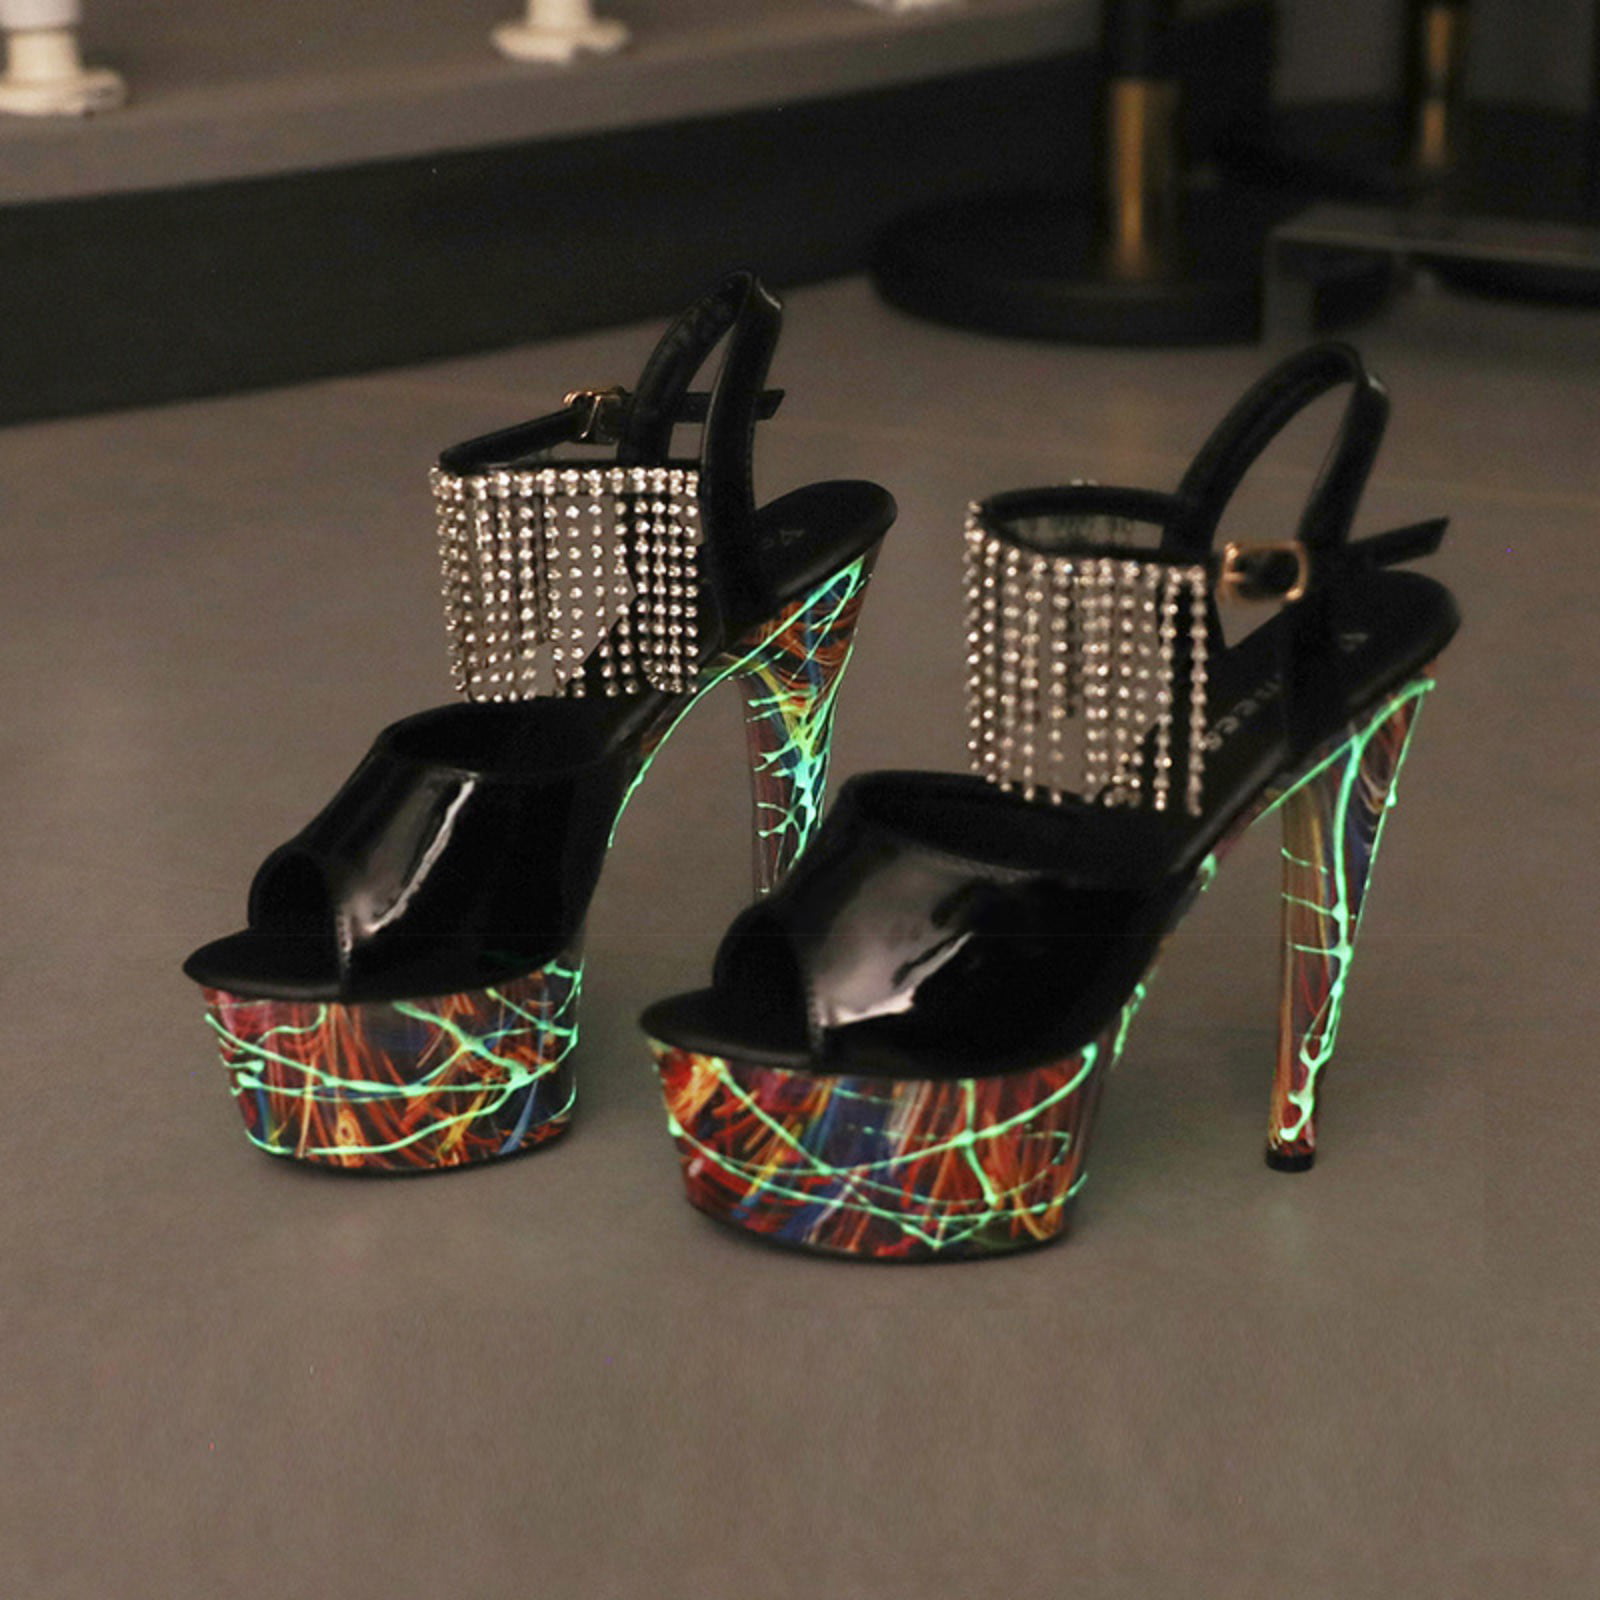 12.5cm high heel and front platform| Alibaba.com